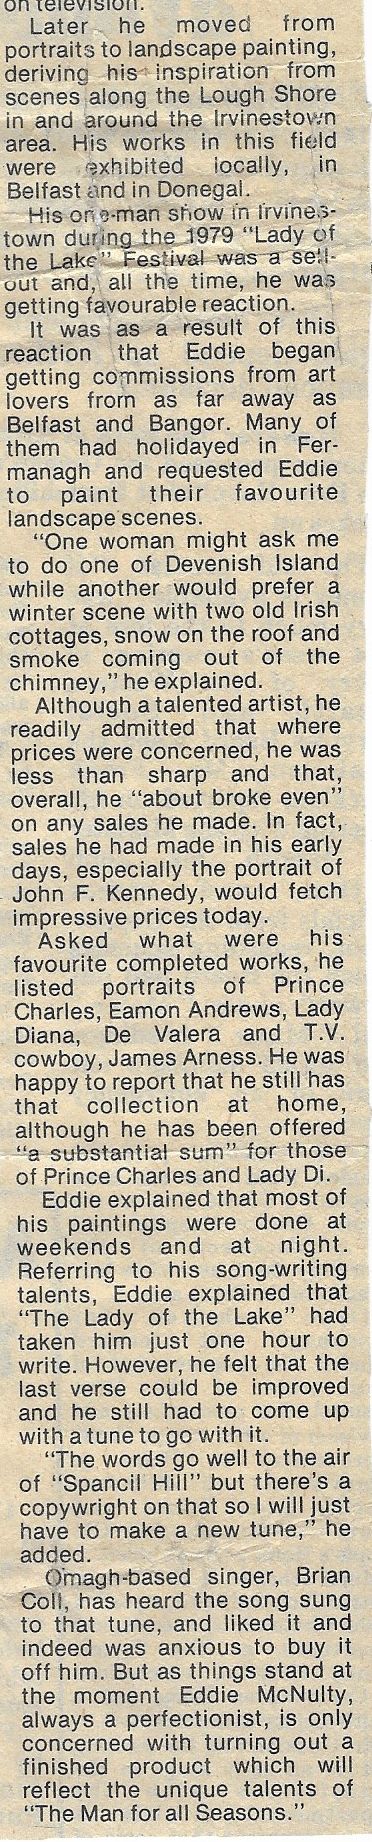 The Fermanagh Herald, Saturday, November 7th, 1981 (2)